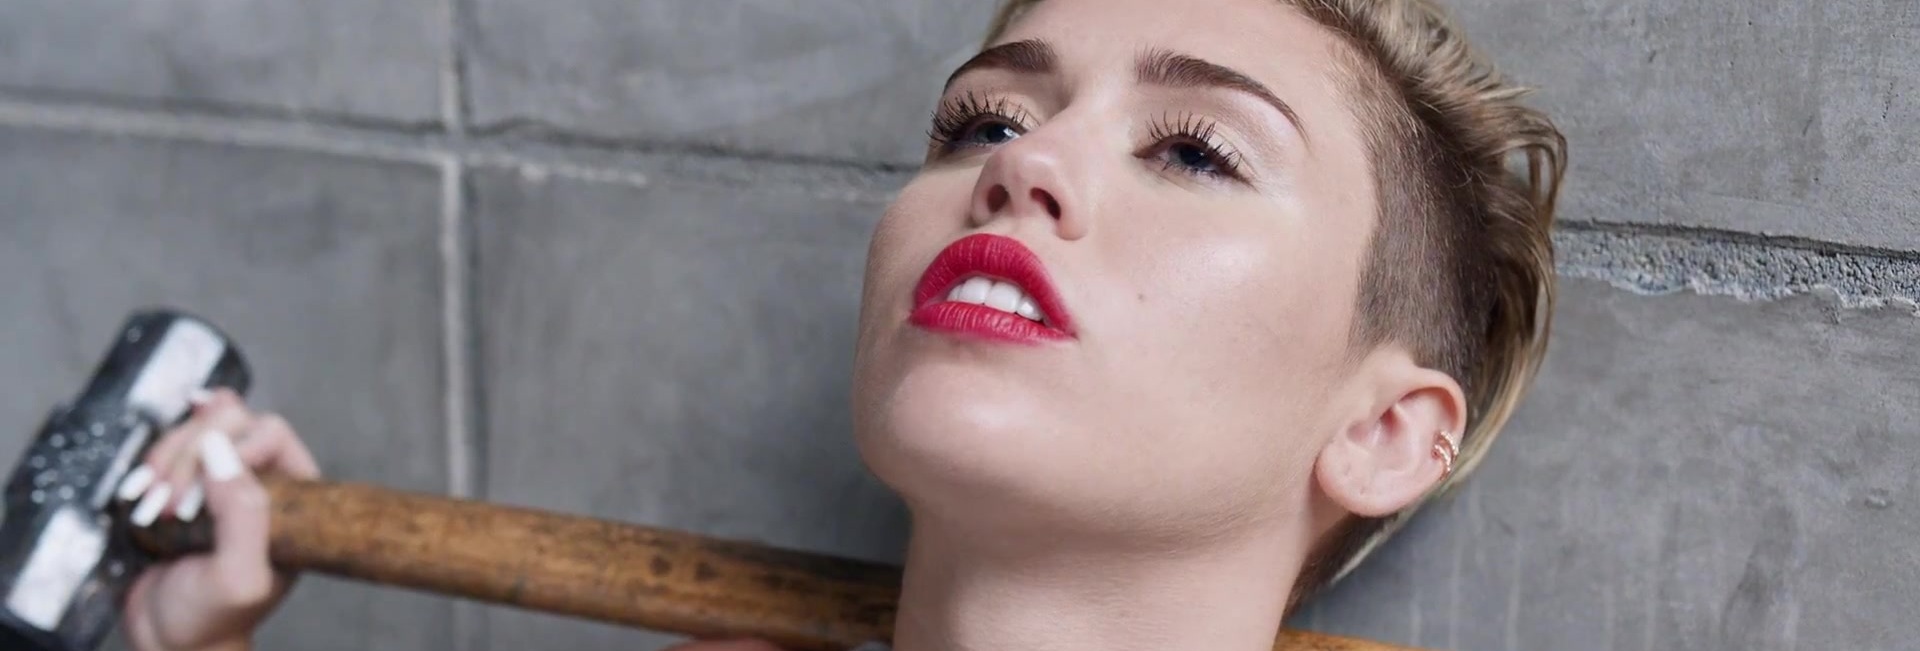 Miley Cyrus Wrecking Ball Wallpaper - WallpaperSafari.